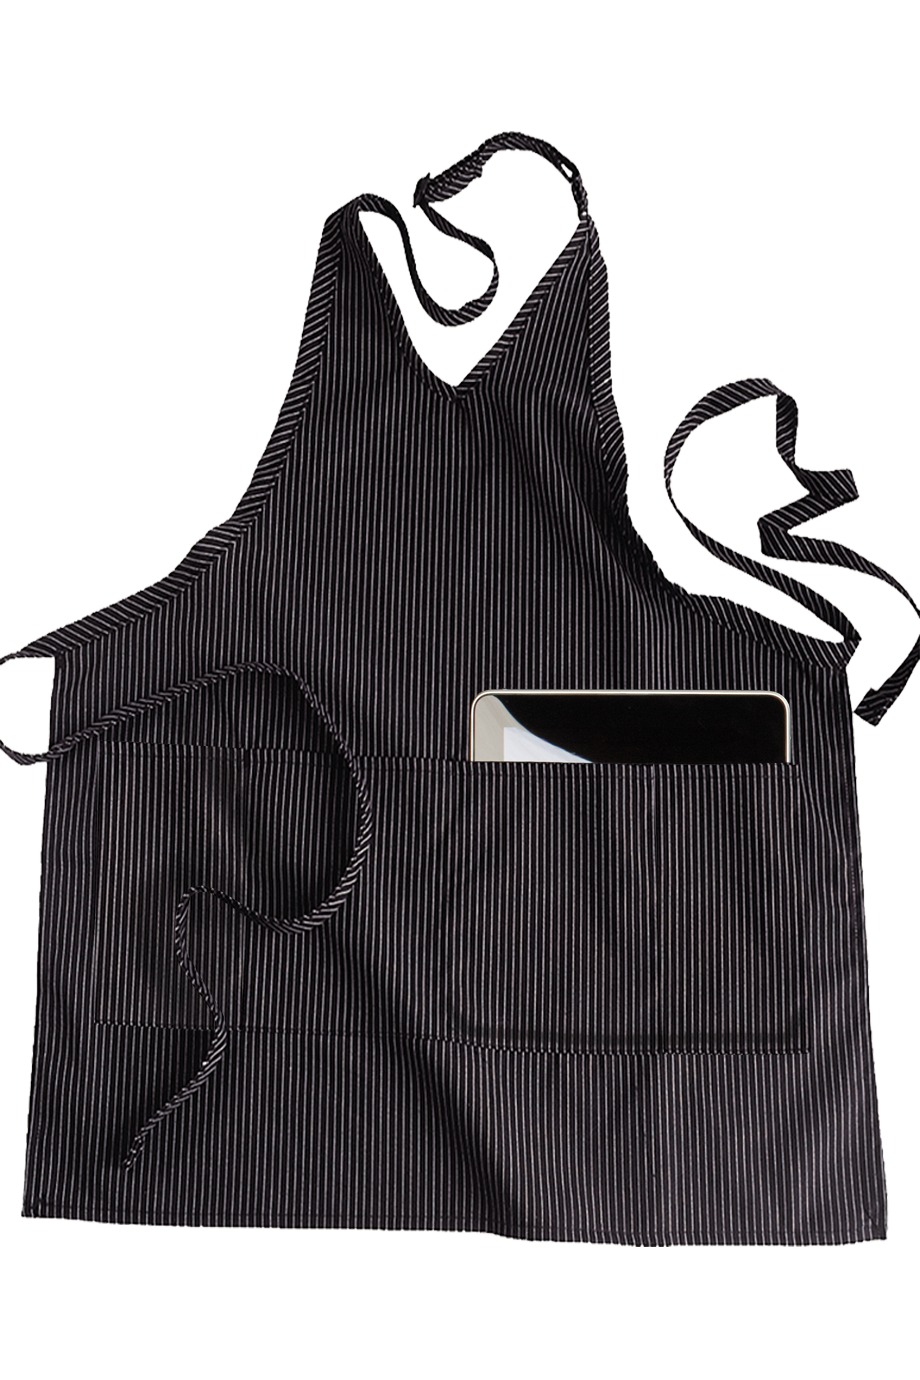 Edwards Garment 9009 - V-Neck Bib Apron With Pockets